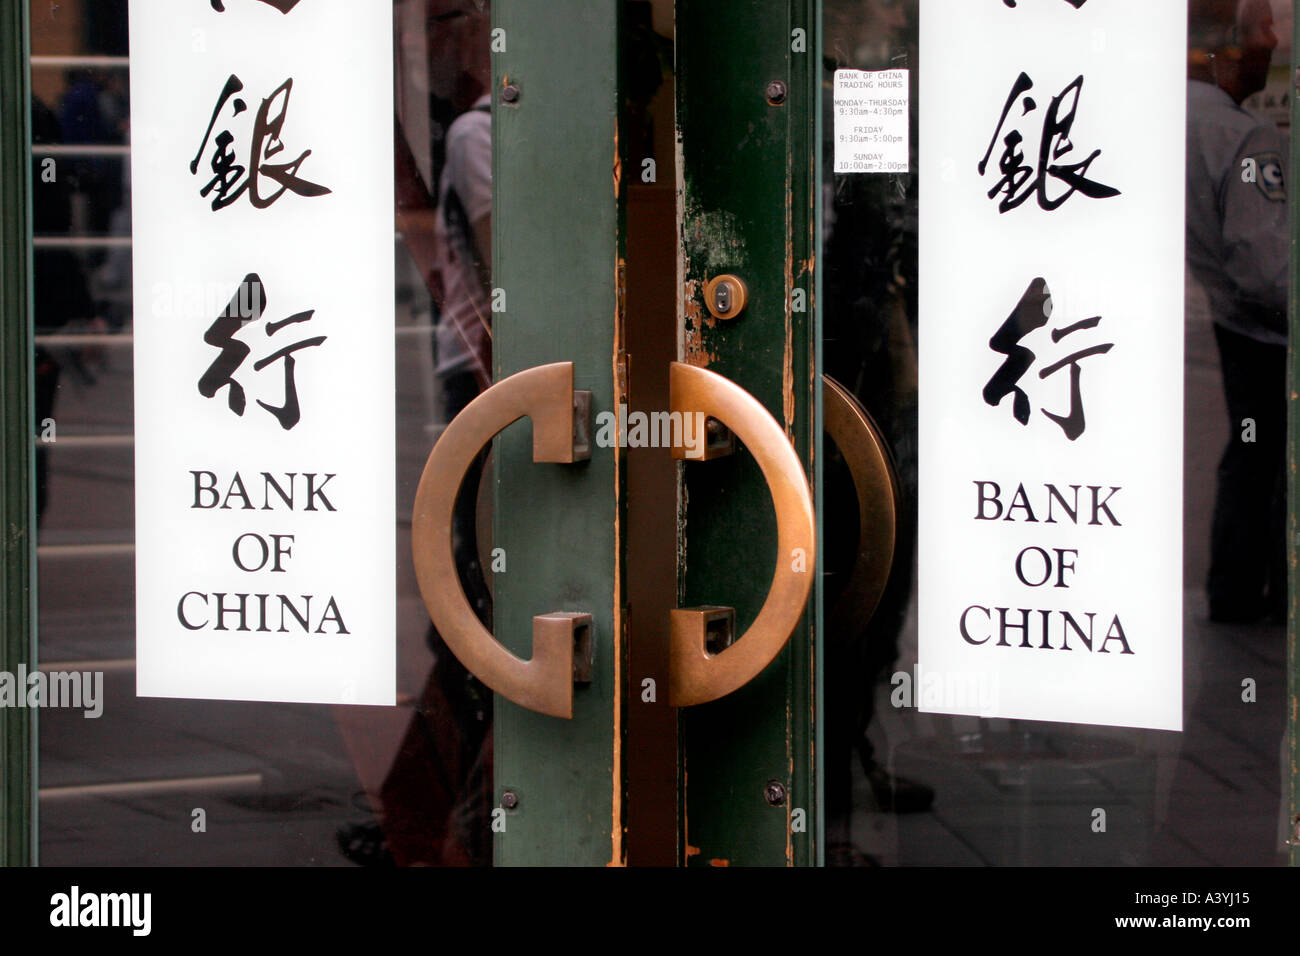 Bank of China Stock Photo